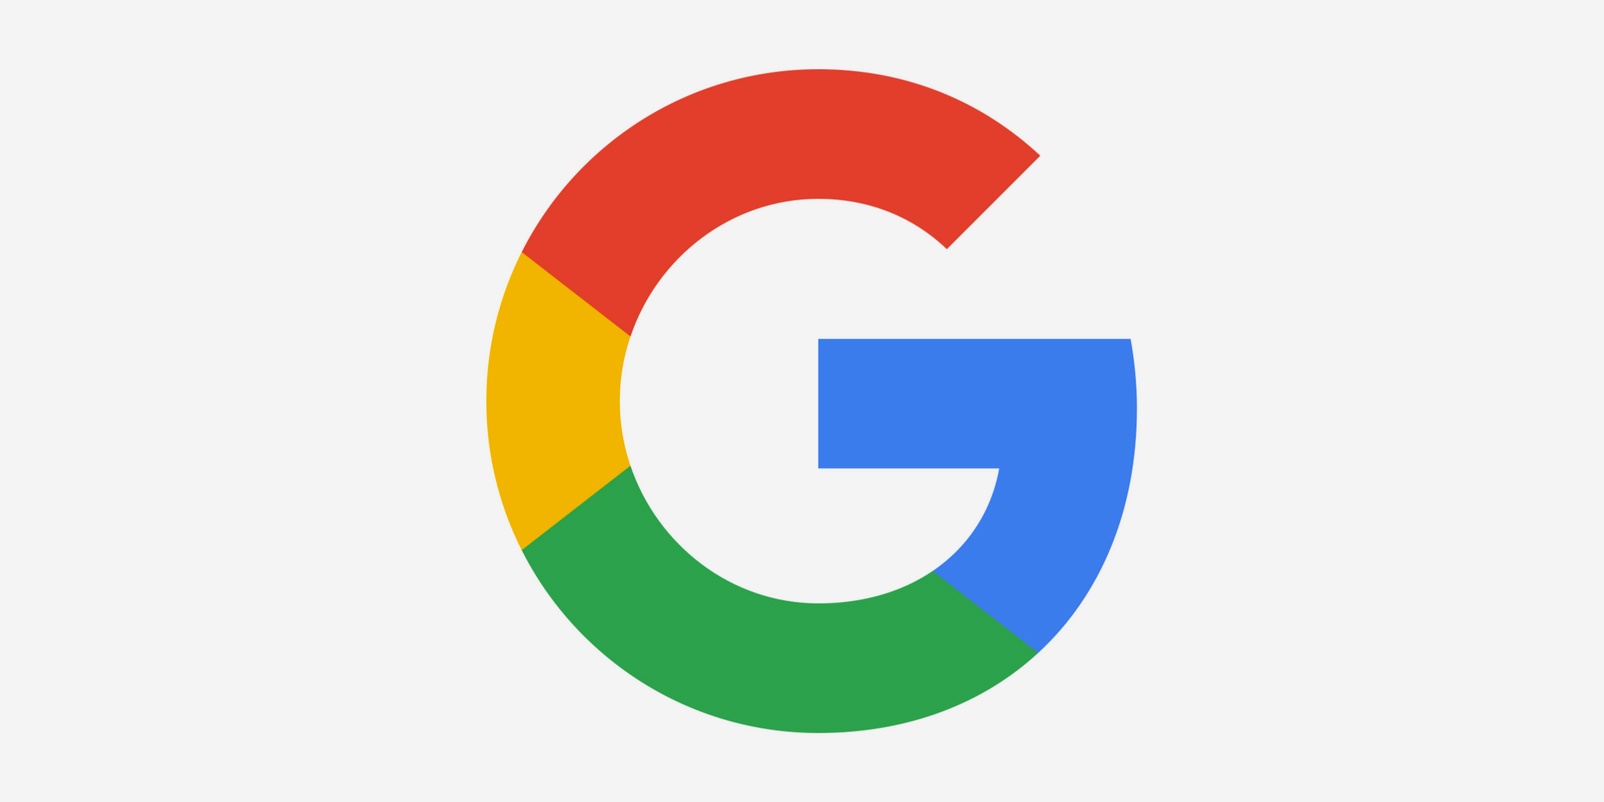 google - ungt, men stadig berømt logo